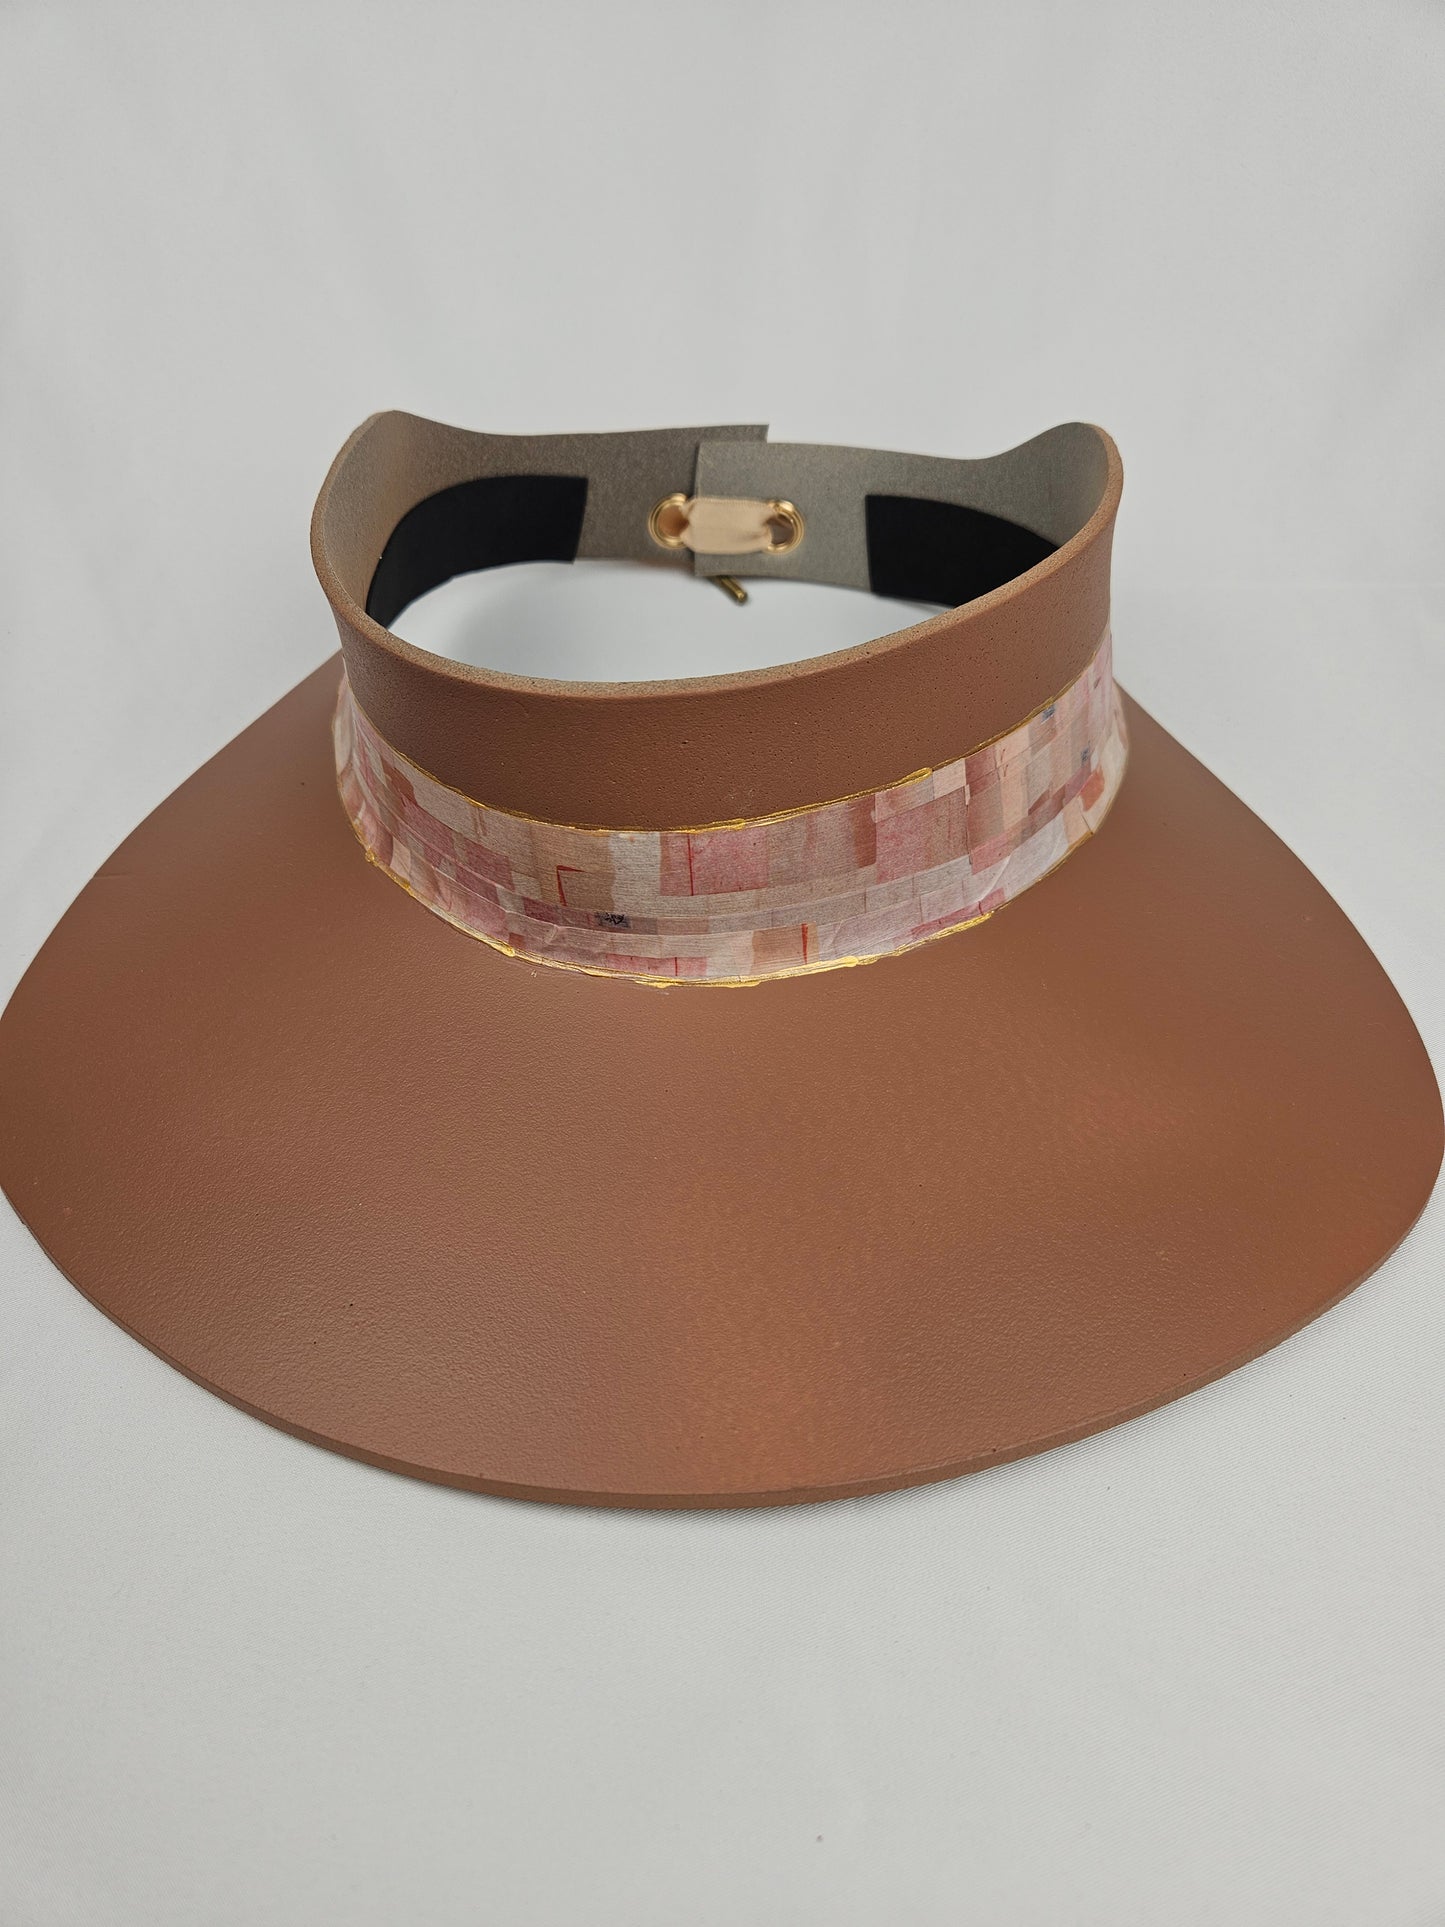 Tall Caramel Brown Audrey Sun Visor Hat with Stylish Pale Pink Collage Style Band: UV Resistant, Walks, 1950s, Brunch, Tea, Golf, Wedding, Church, No Headache, Easter, Pool, Beach, Big Brim